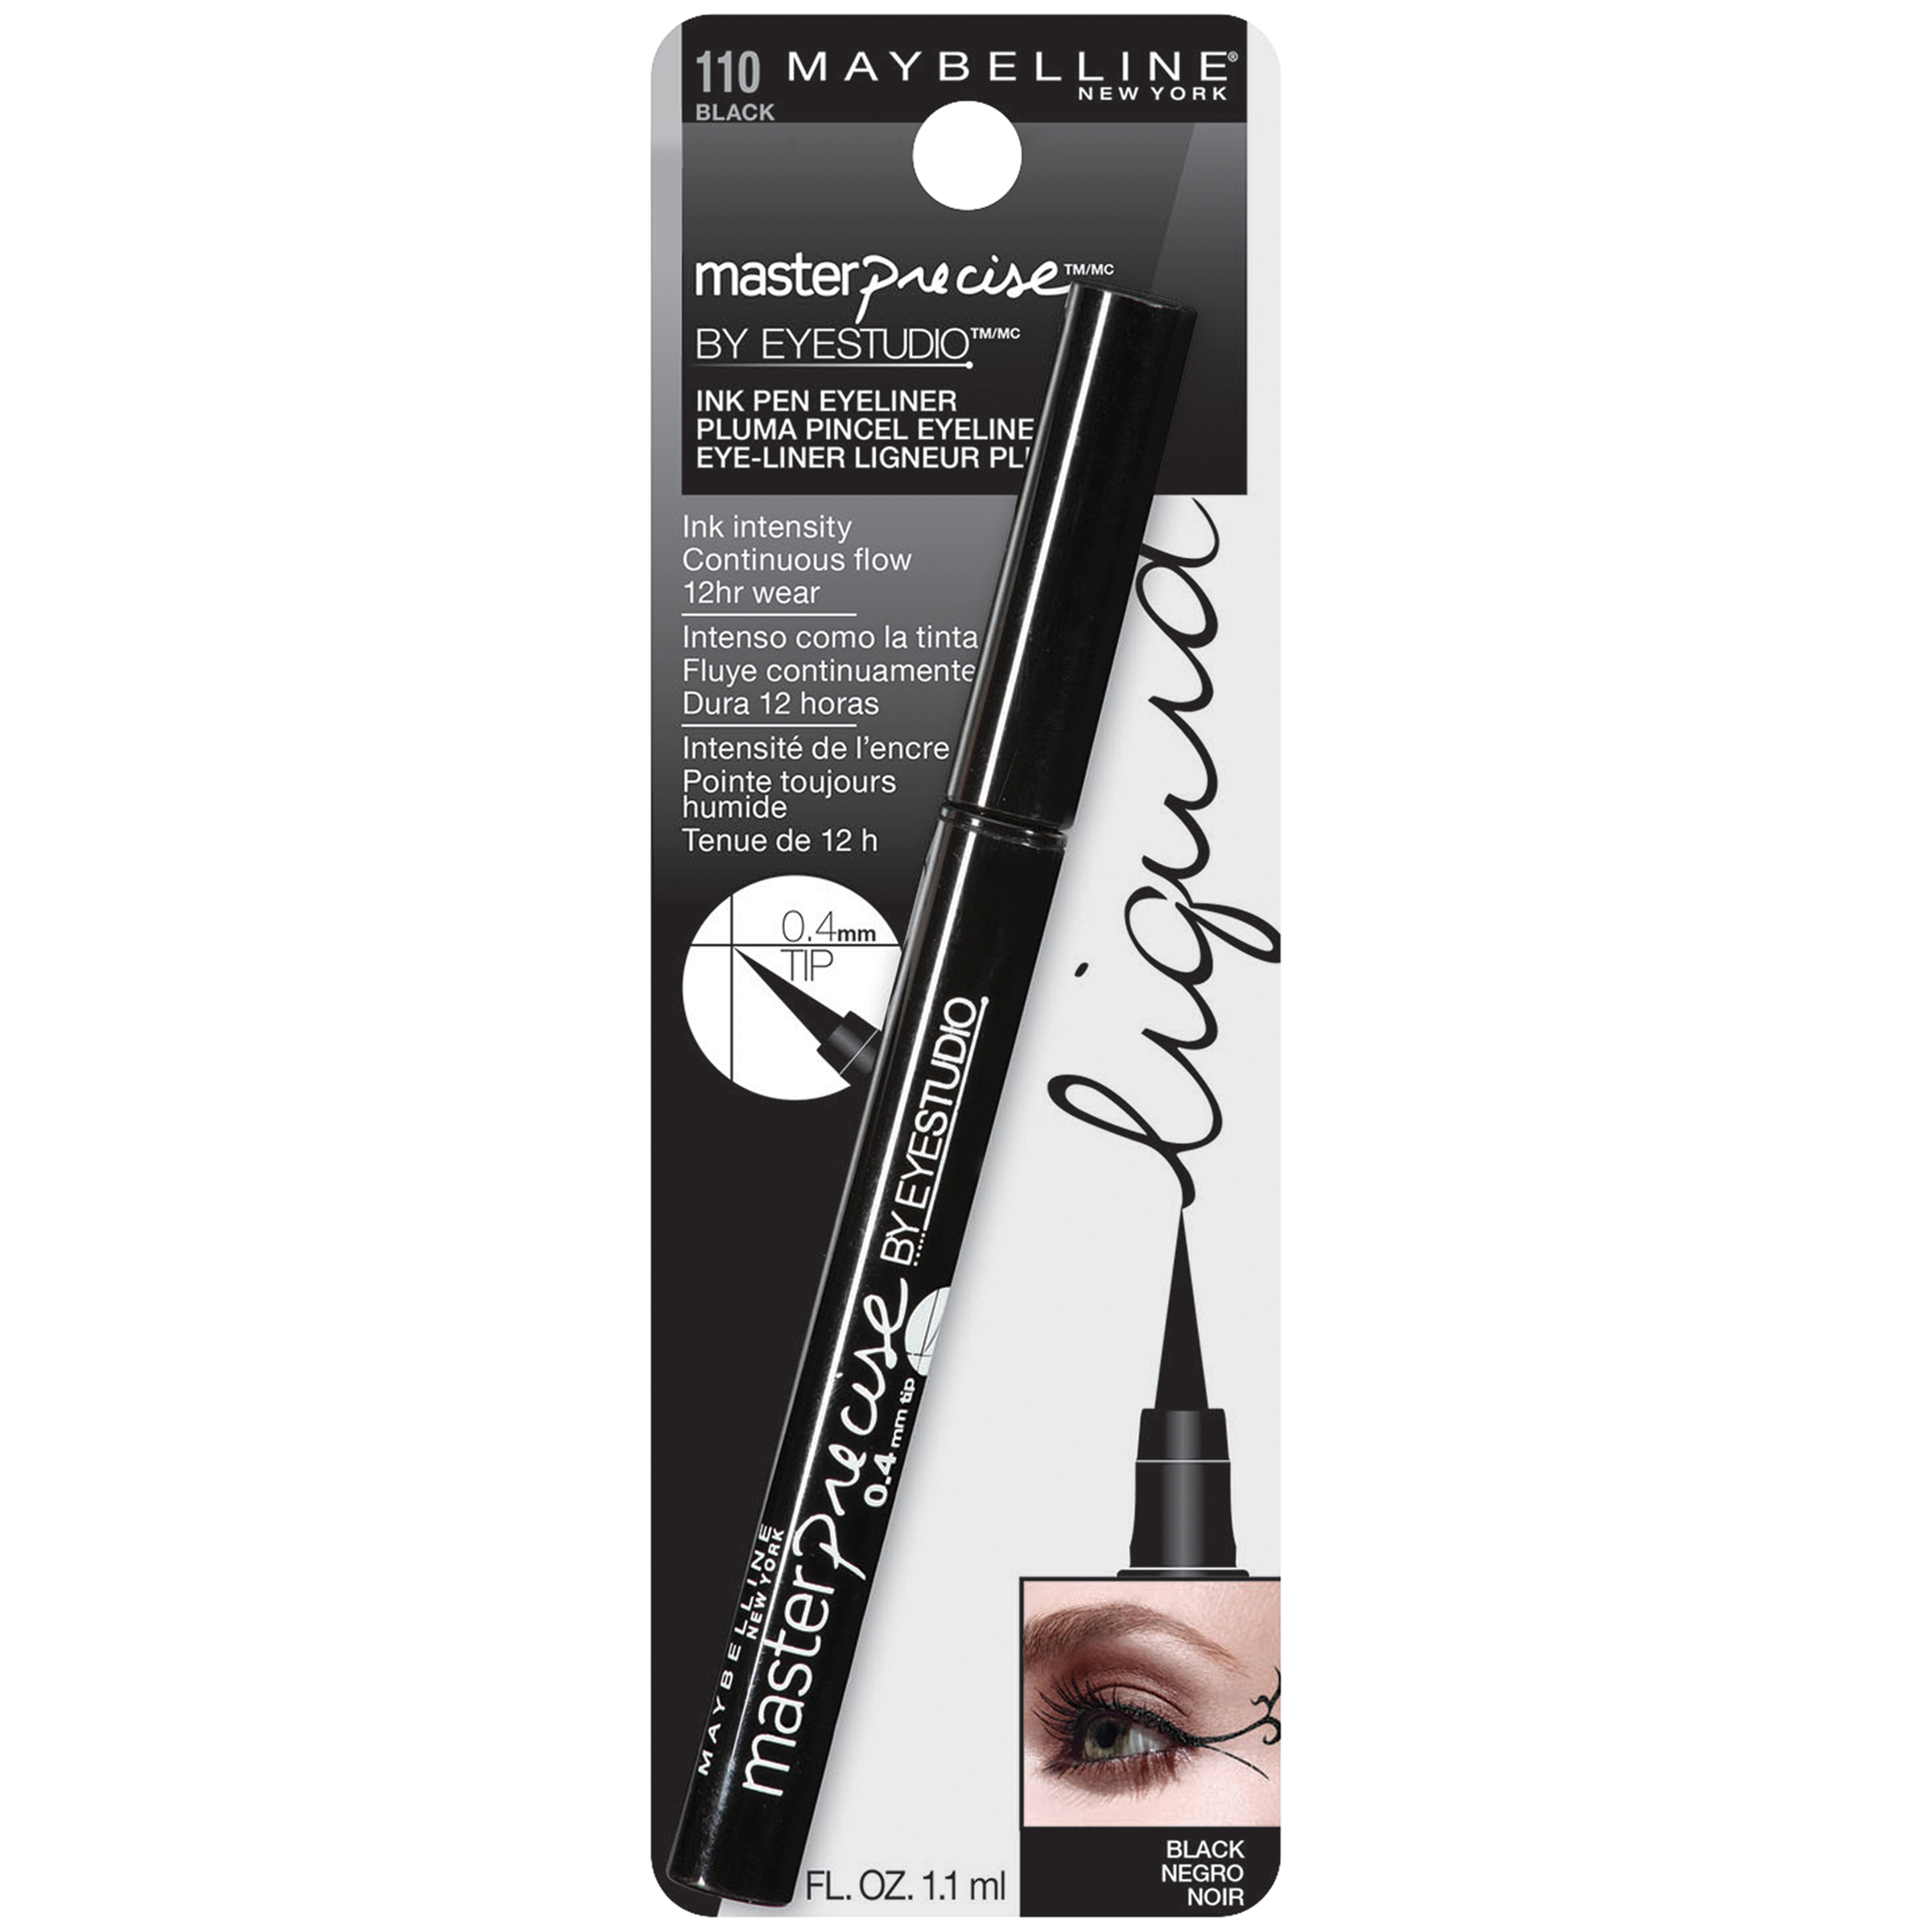 Maybelline Eye Studio Master Precise Pencil Eyeliner, Black - image 1 of 6